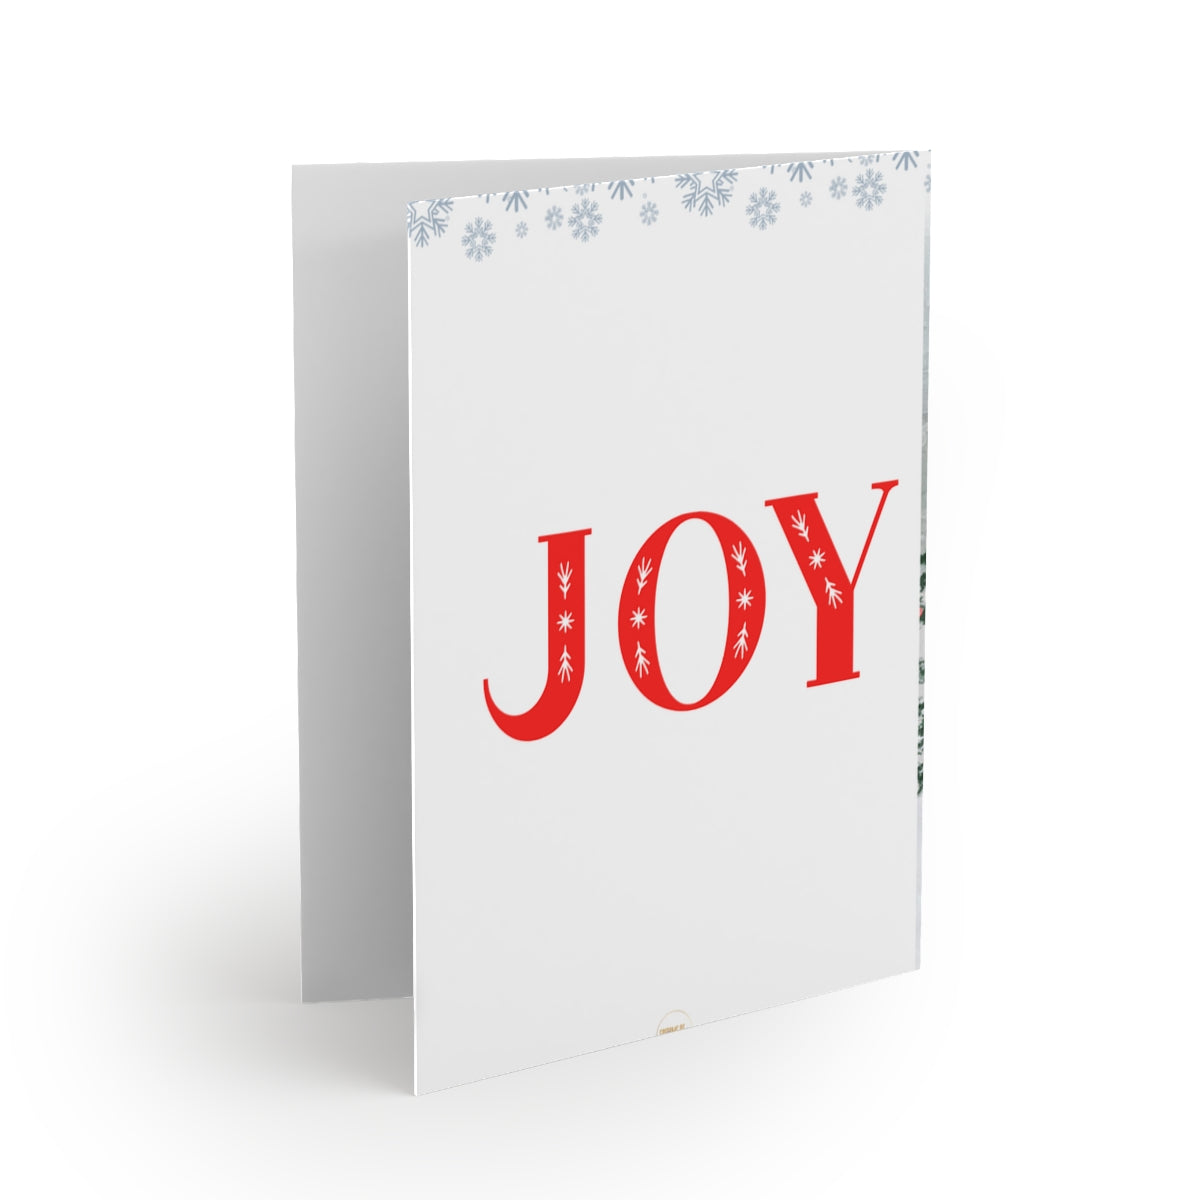 Tis the Season Greeting Cards| Mrs Santa Claus Greeting cards| Black Woman Christmas Cards